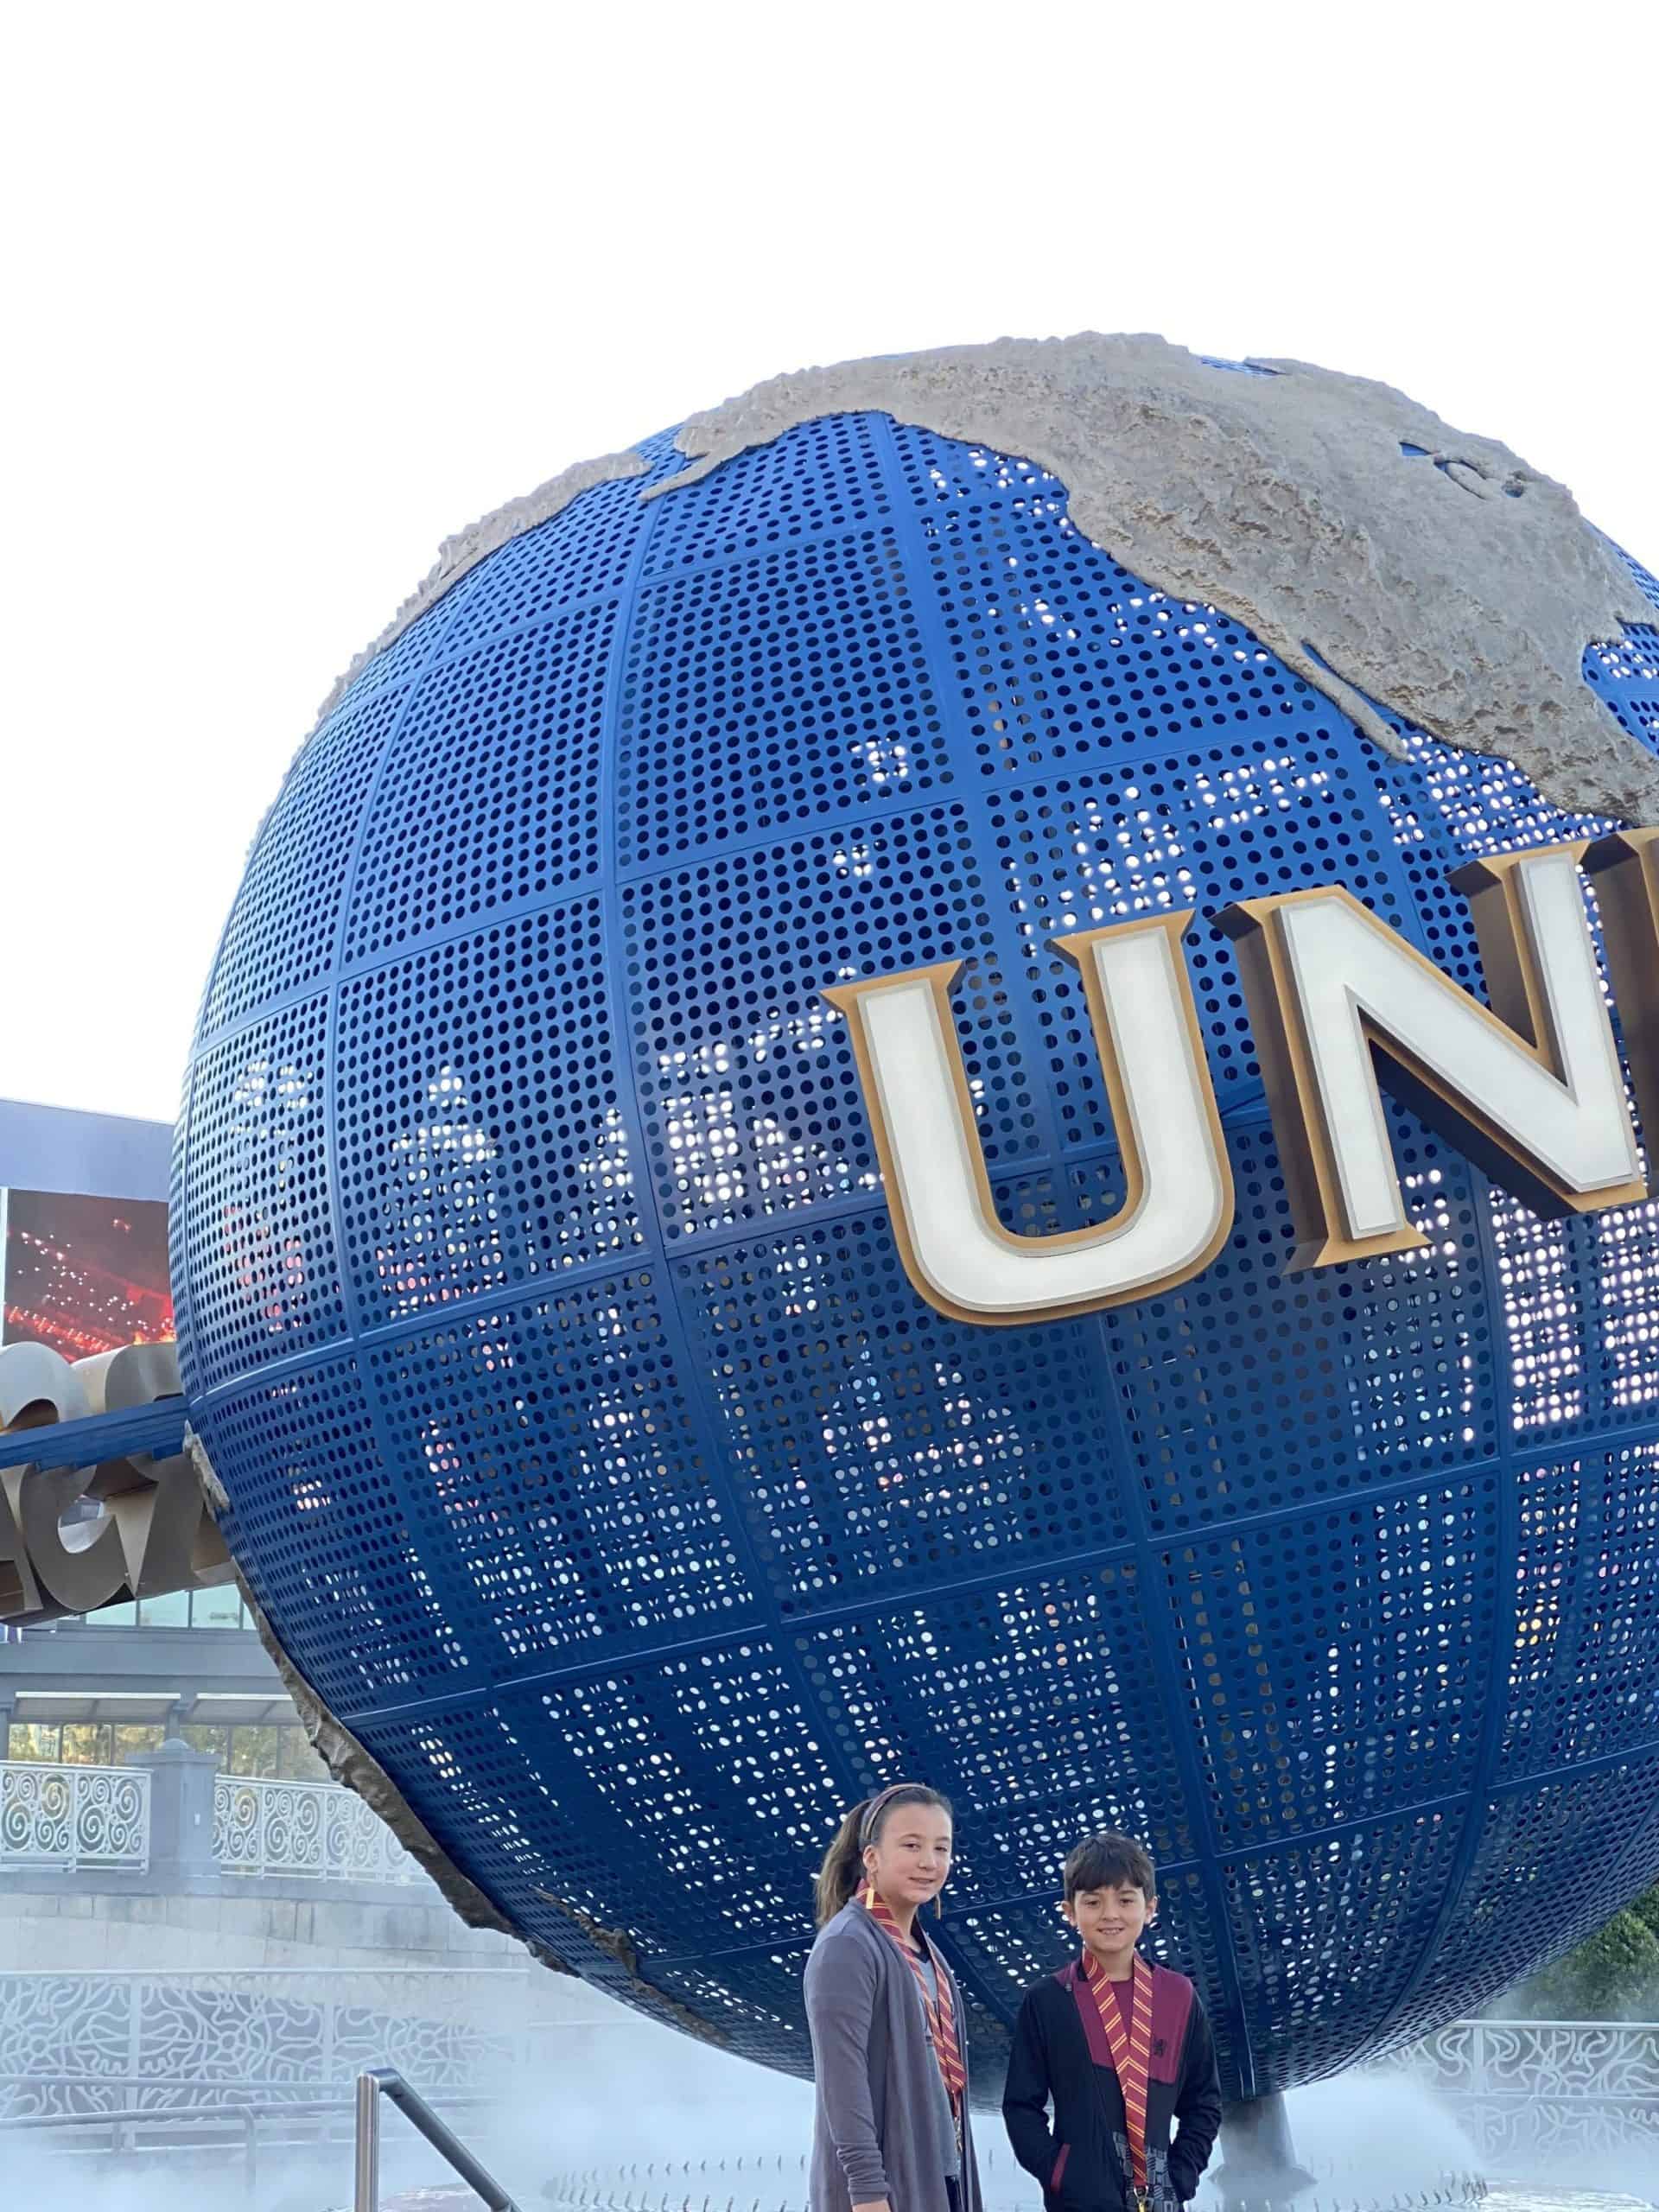 Universal Orlando Resort for Newbies – Arriving at Universal Orlando